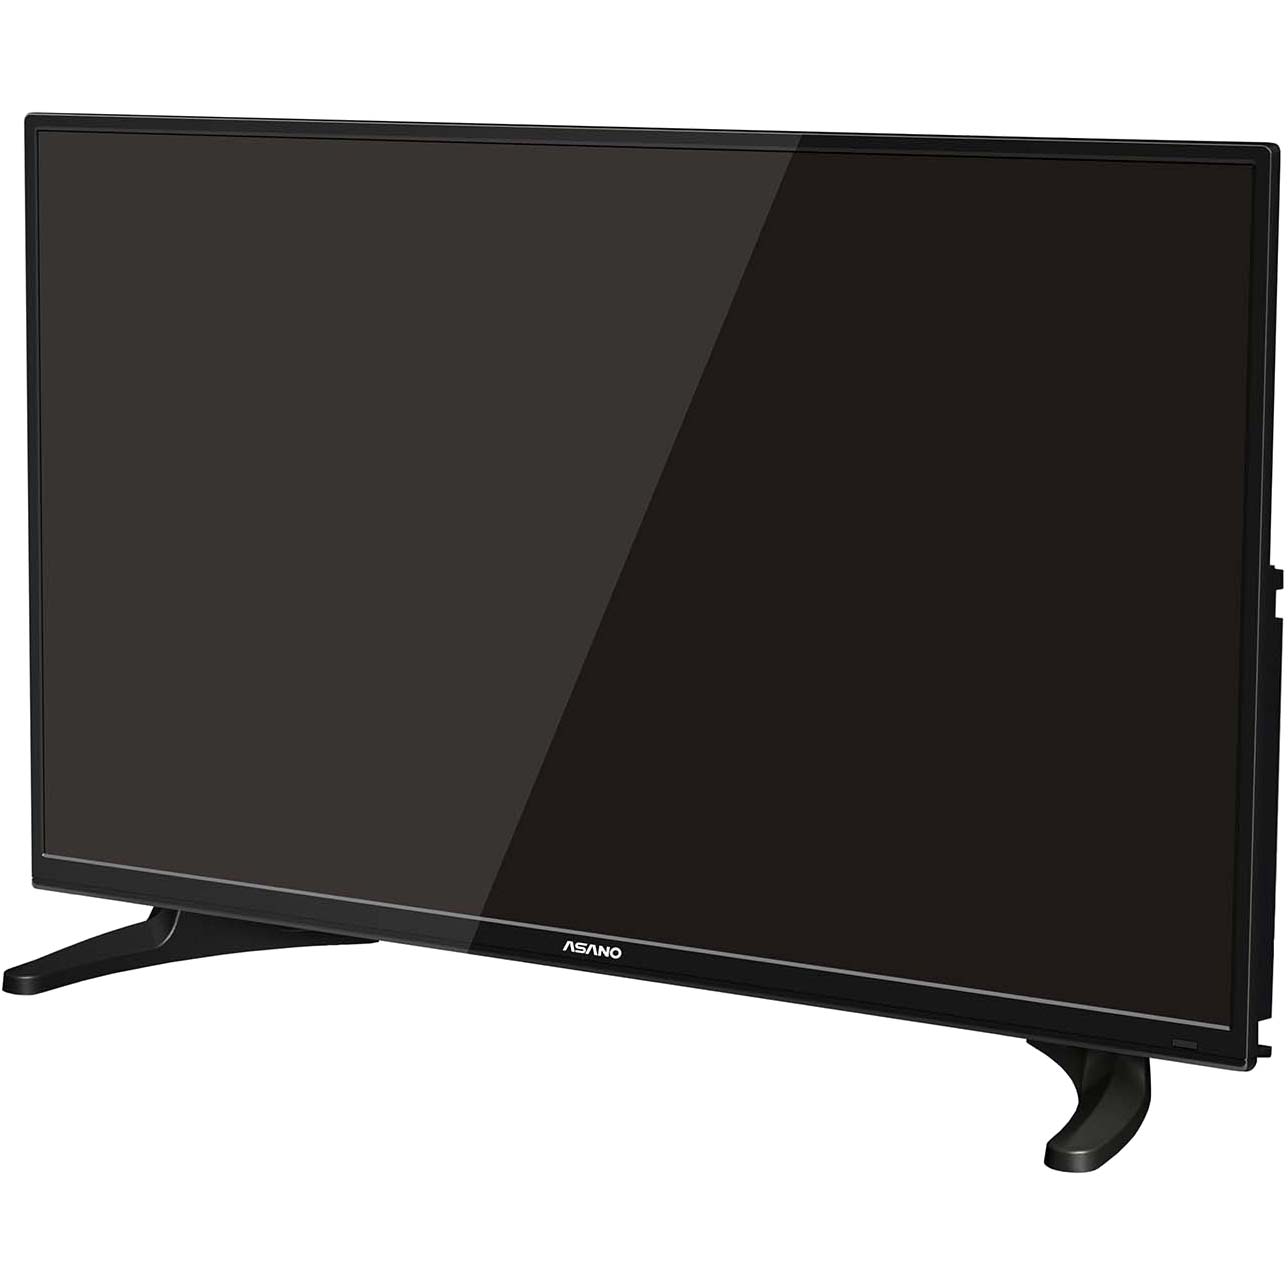 Телевизор Asano 32LH1010T, цвет черный - фото 2